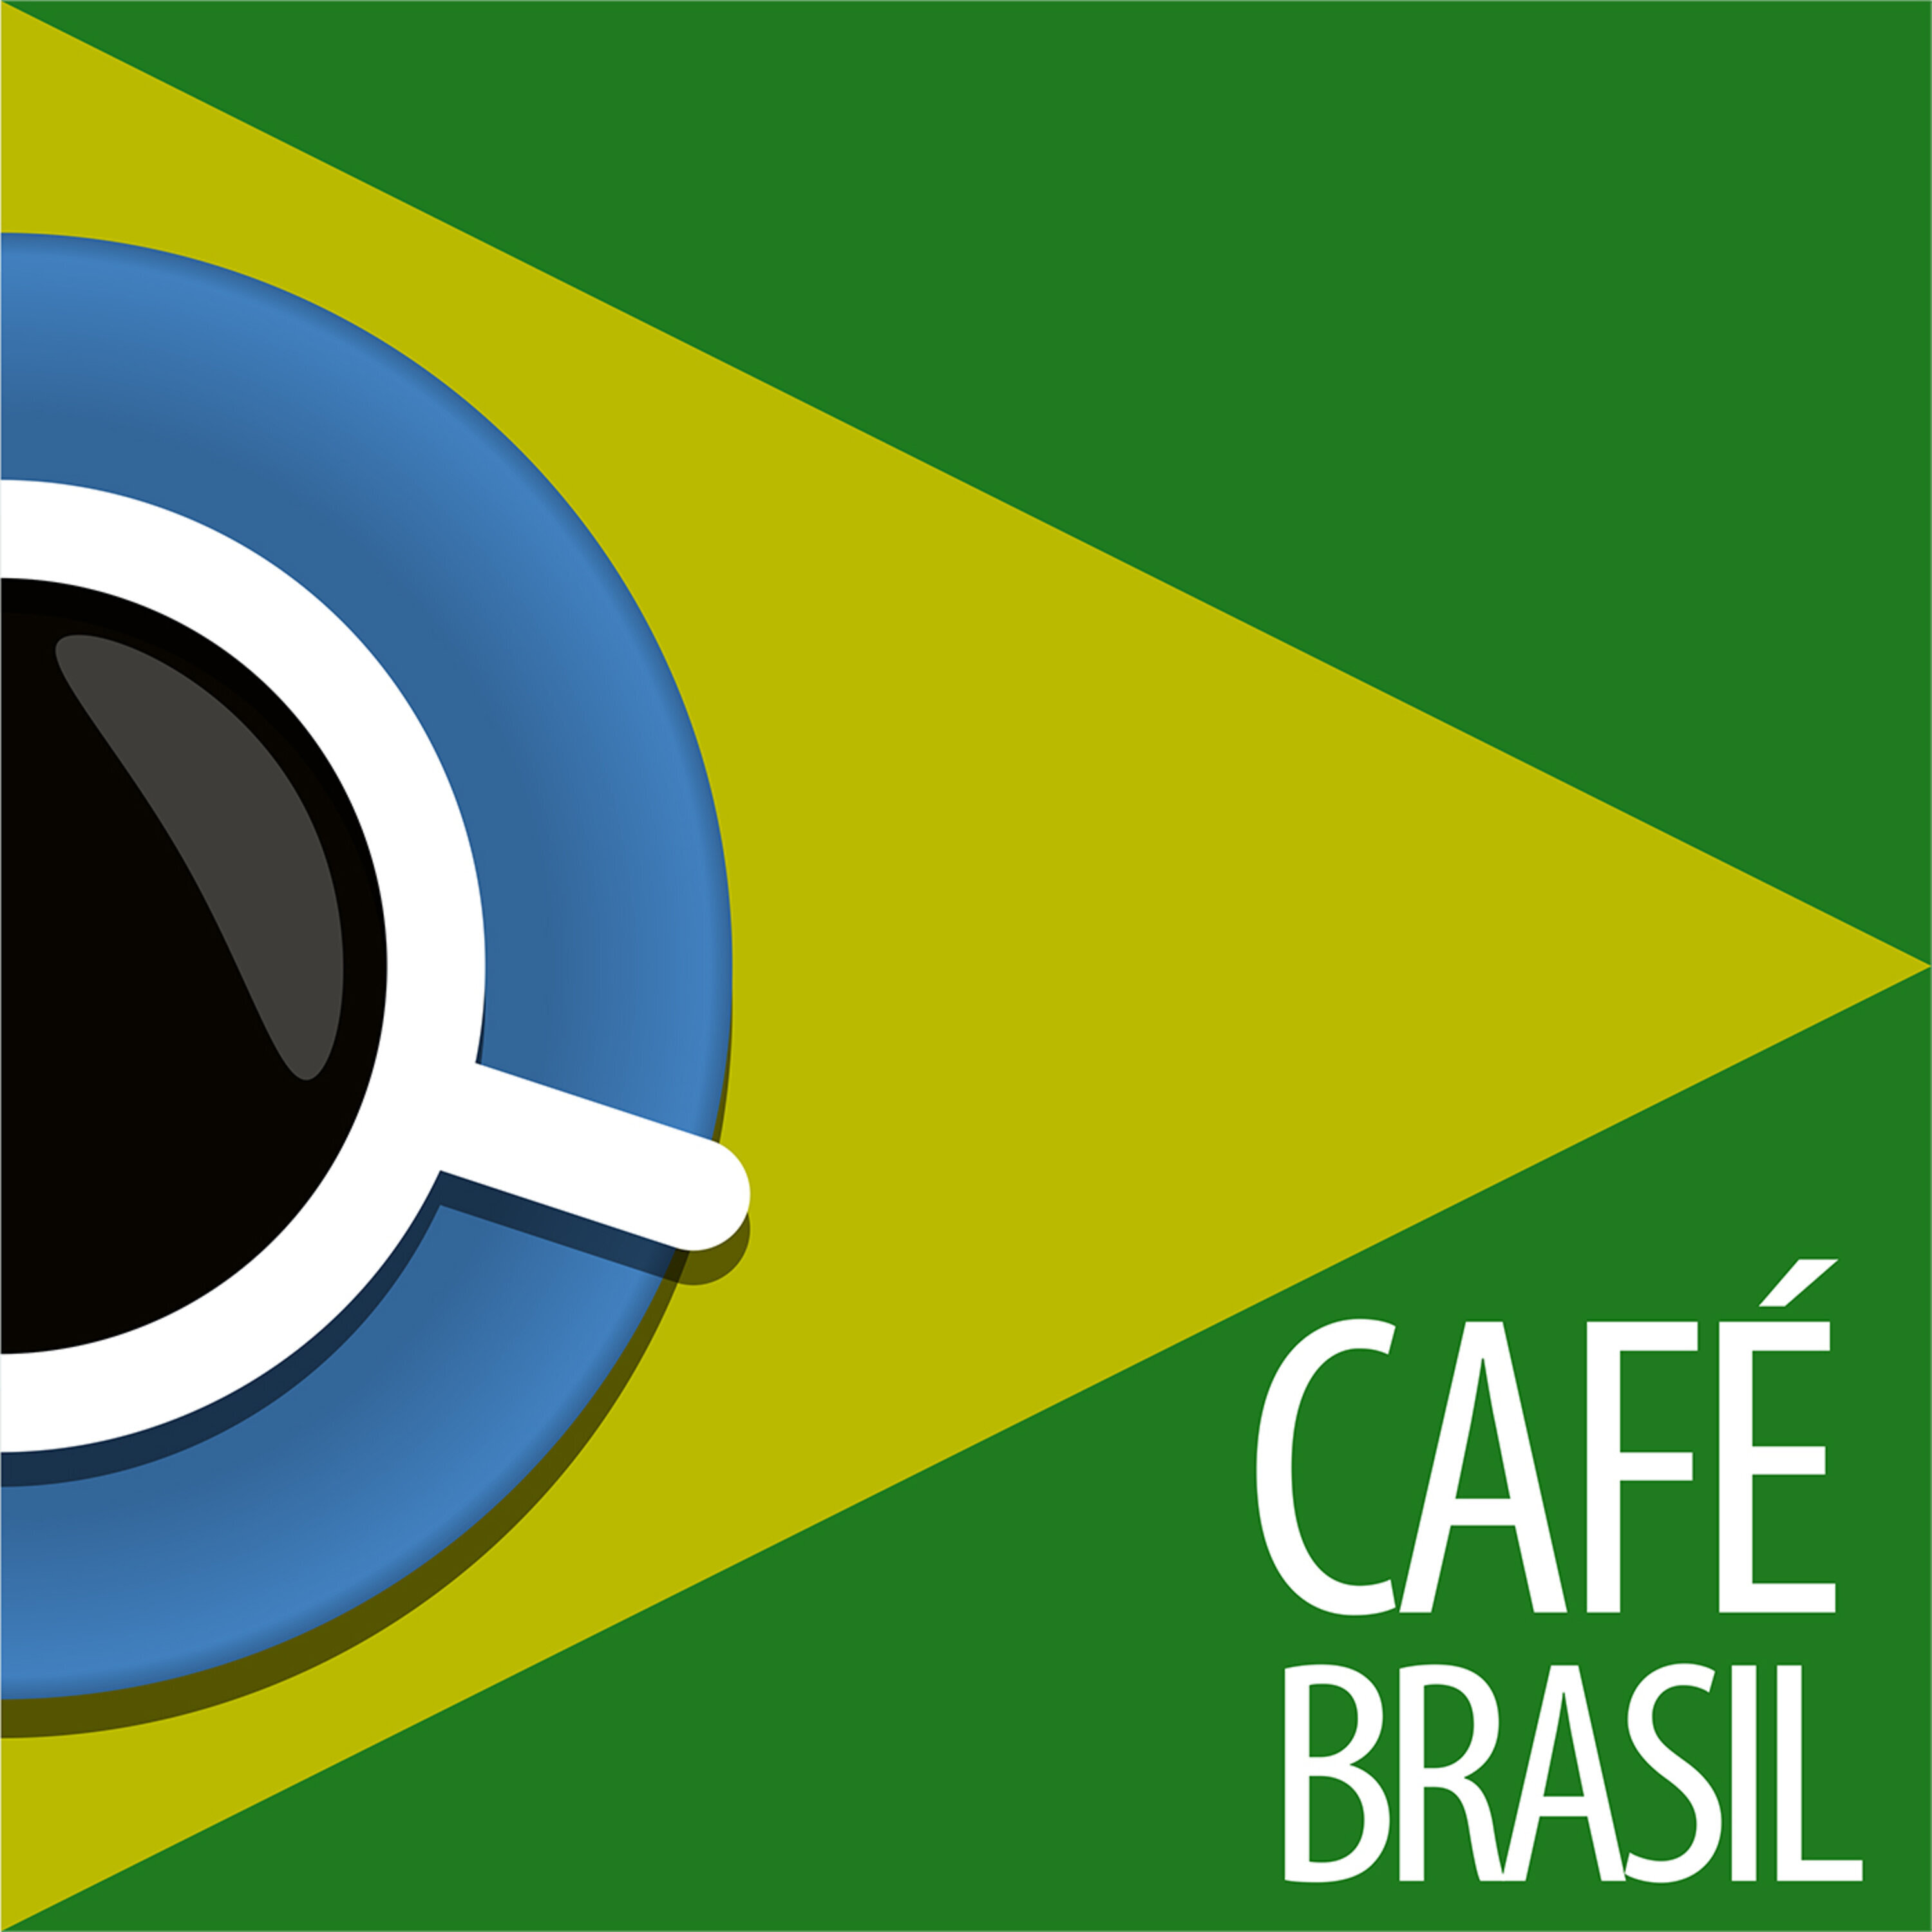 Café Brasil:Luciano Pires & Café Brasil Editorial Ltda